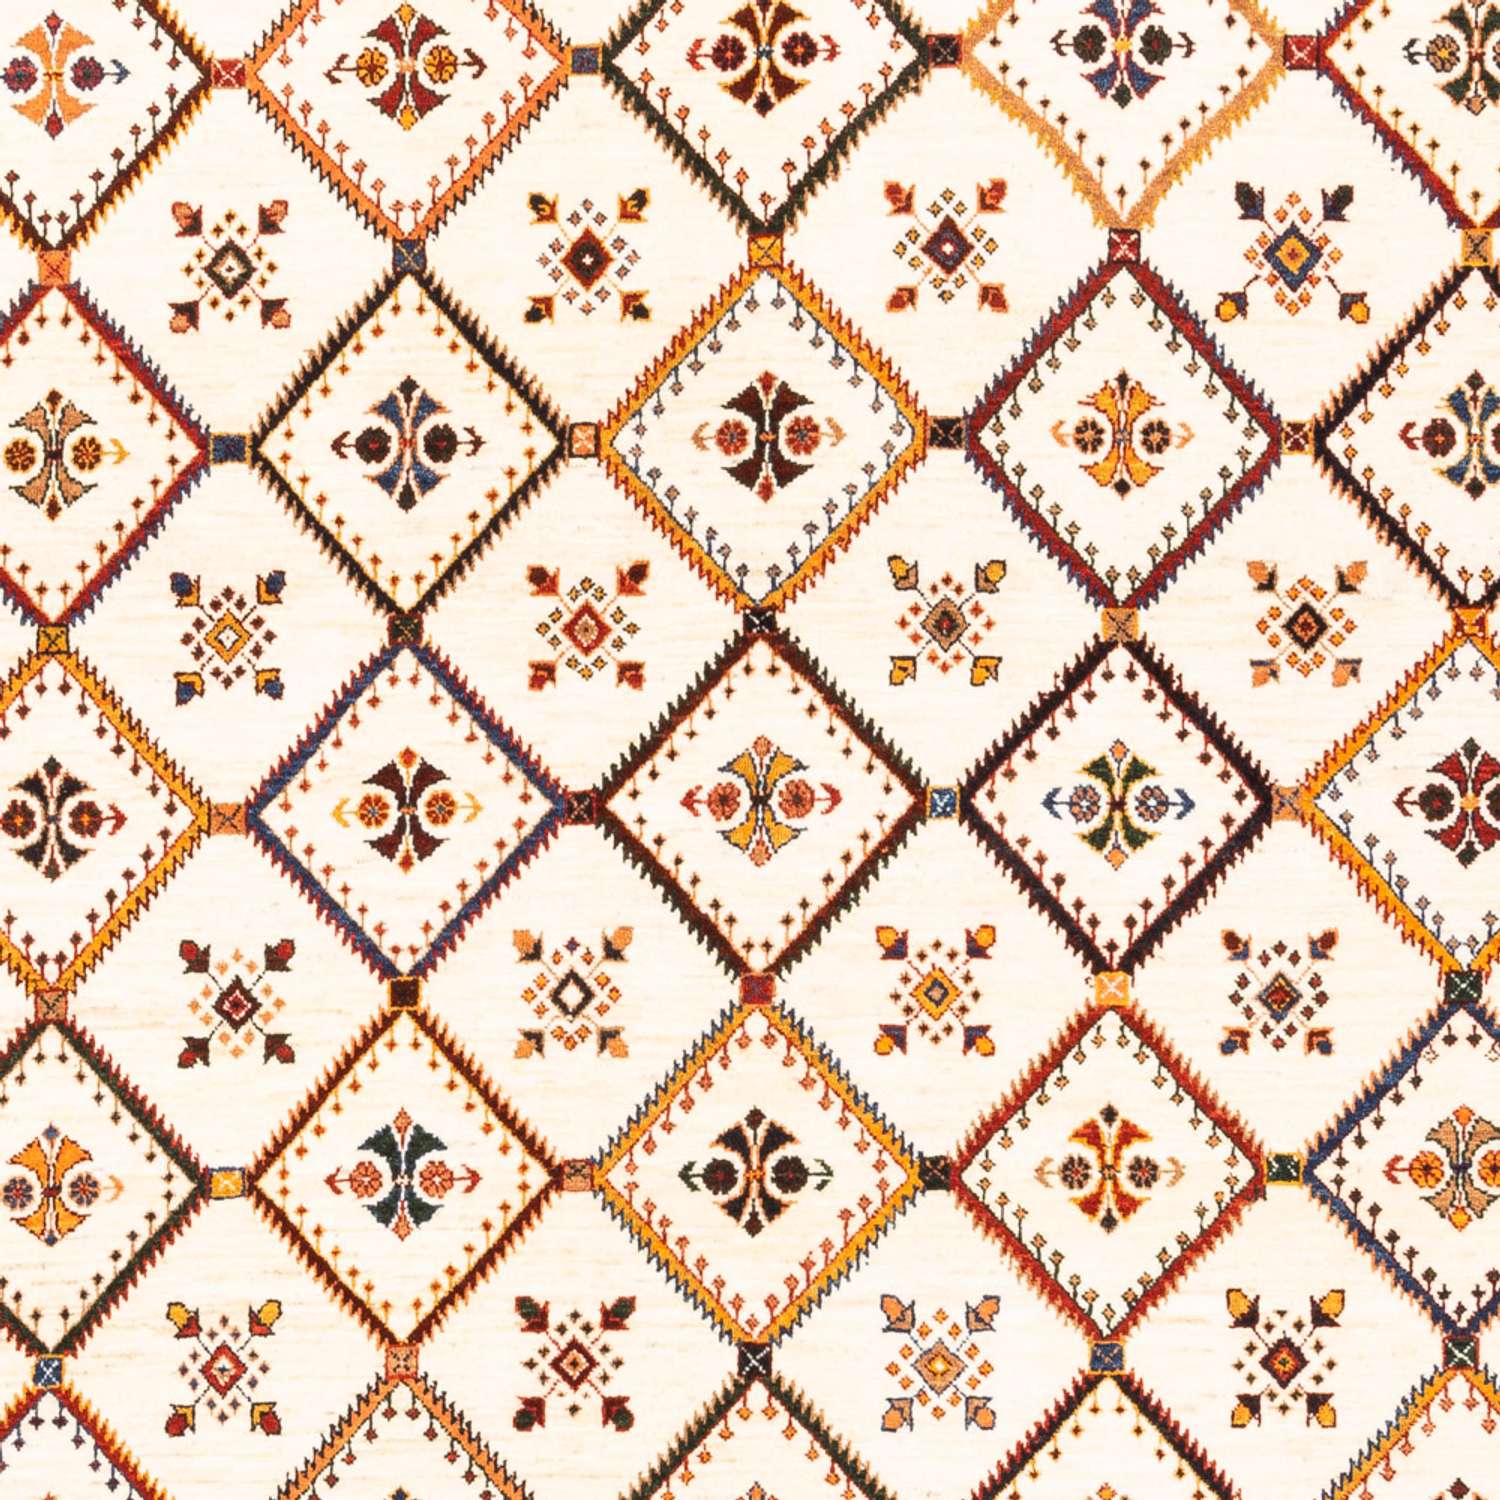 Gabbeh tapijt - Perzisch - 234 x 180 cm - crème